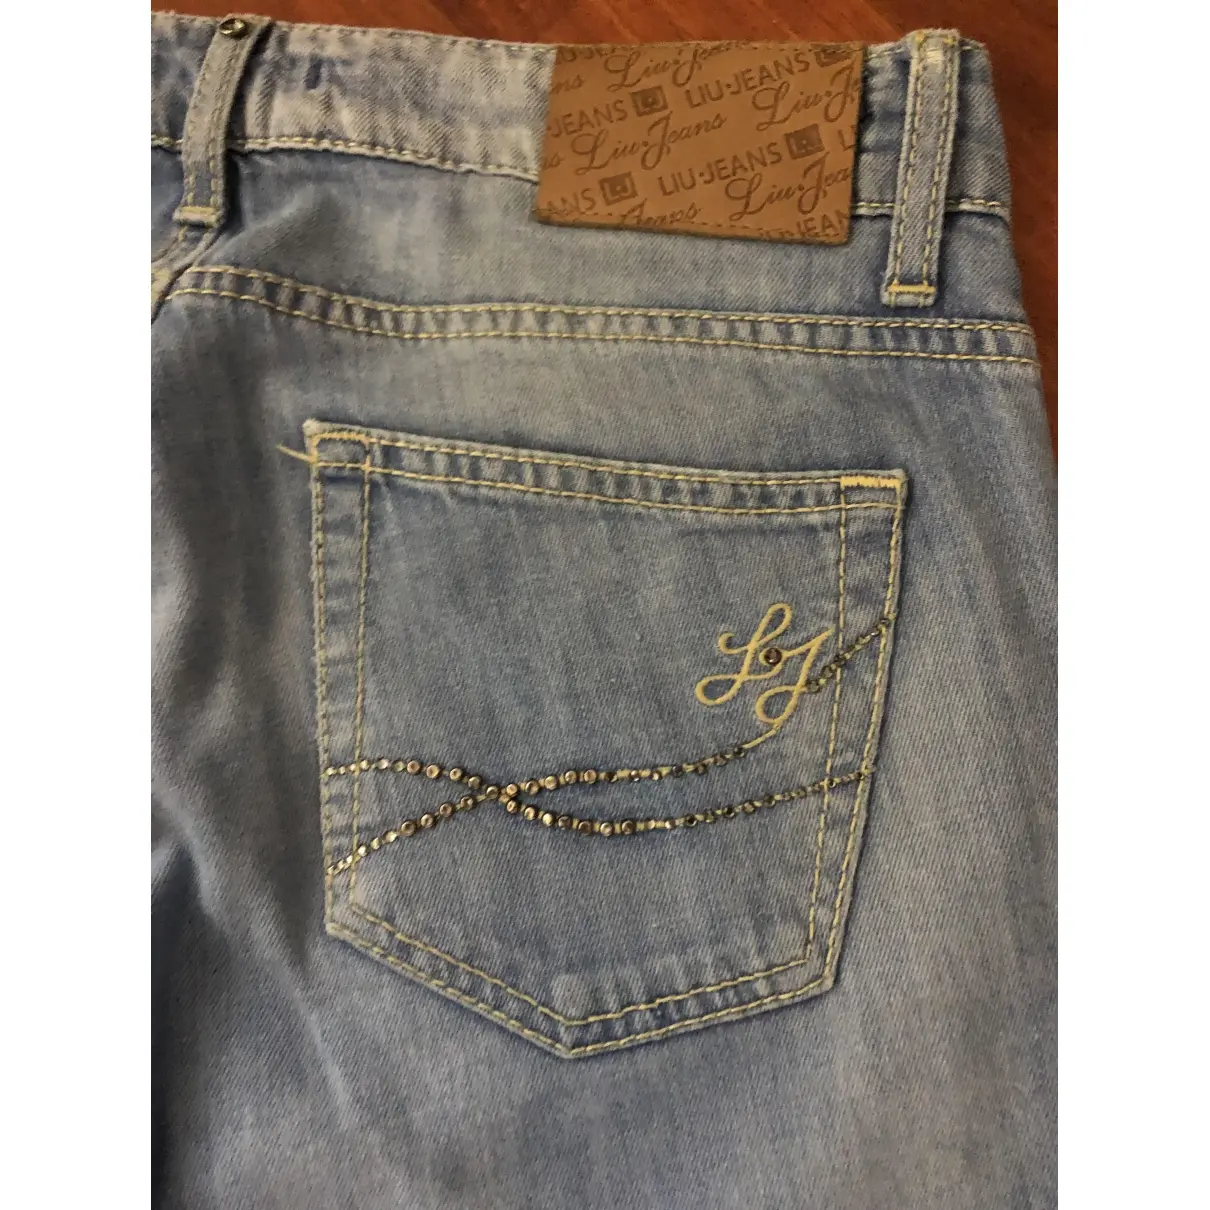 Liu.Jo Straight jeans for sale